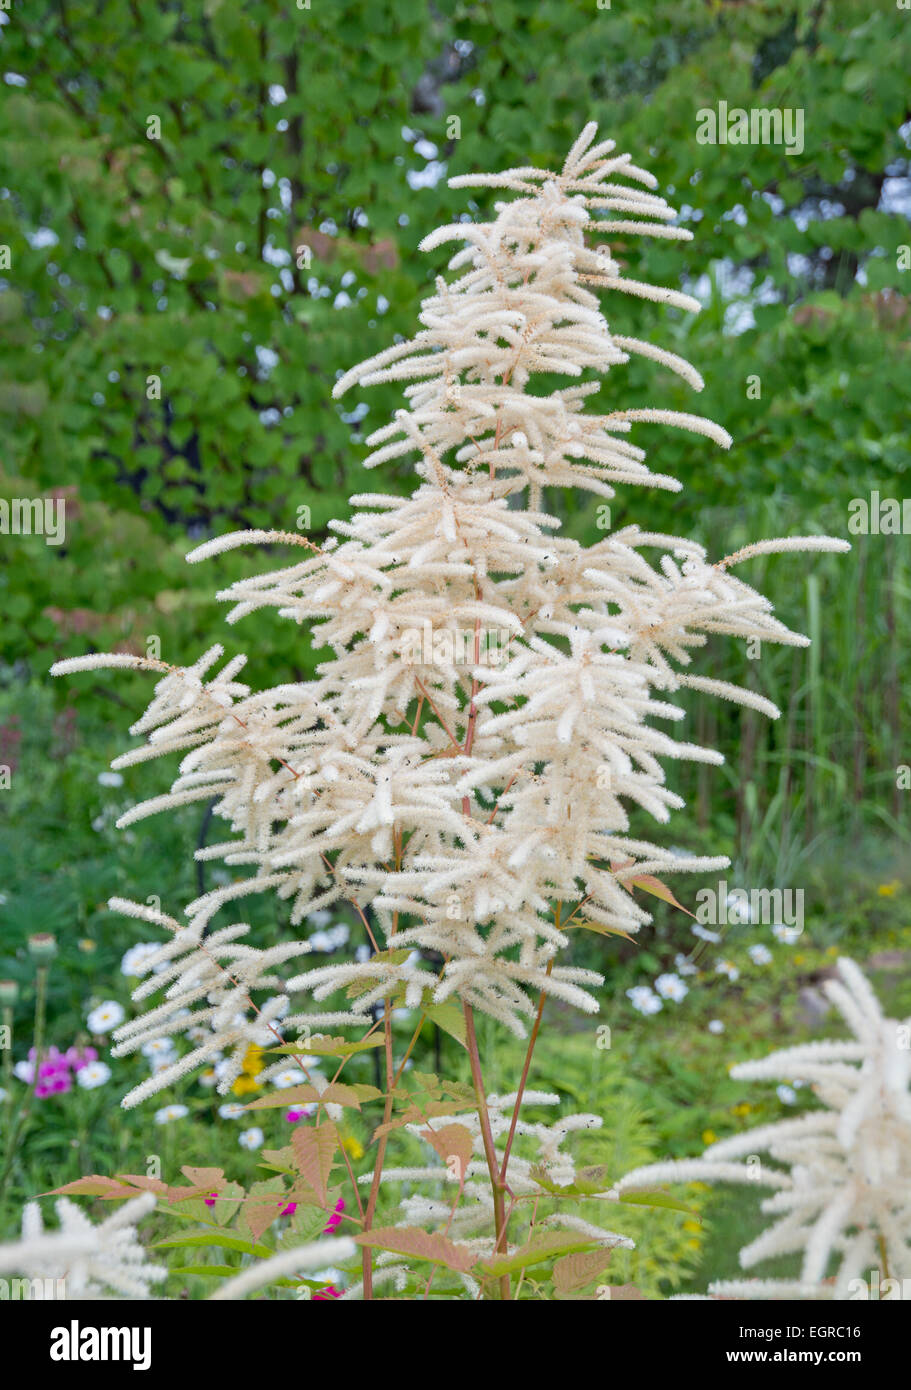 Feathery white Astilbe flowers. Green garden in July, Sweden. Stock Photo